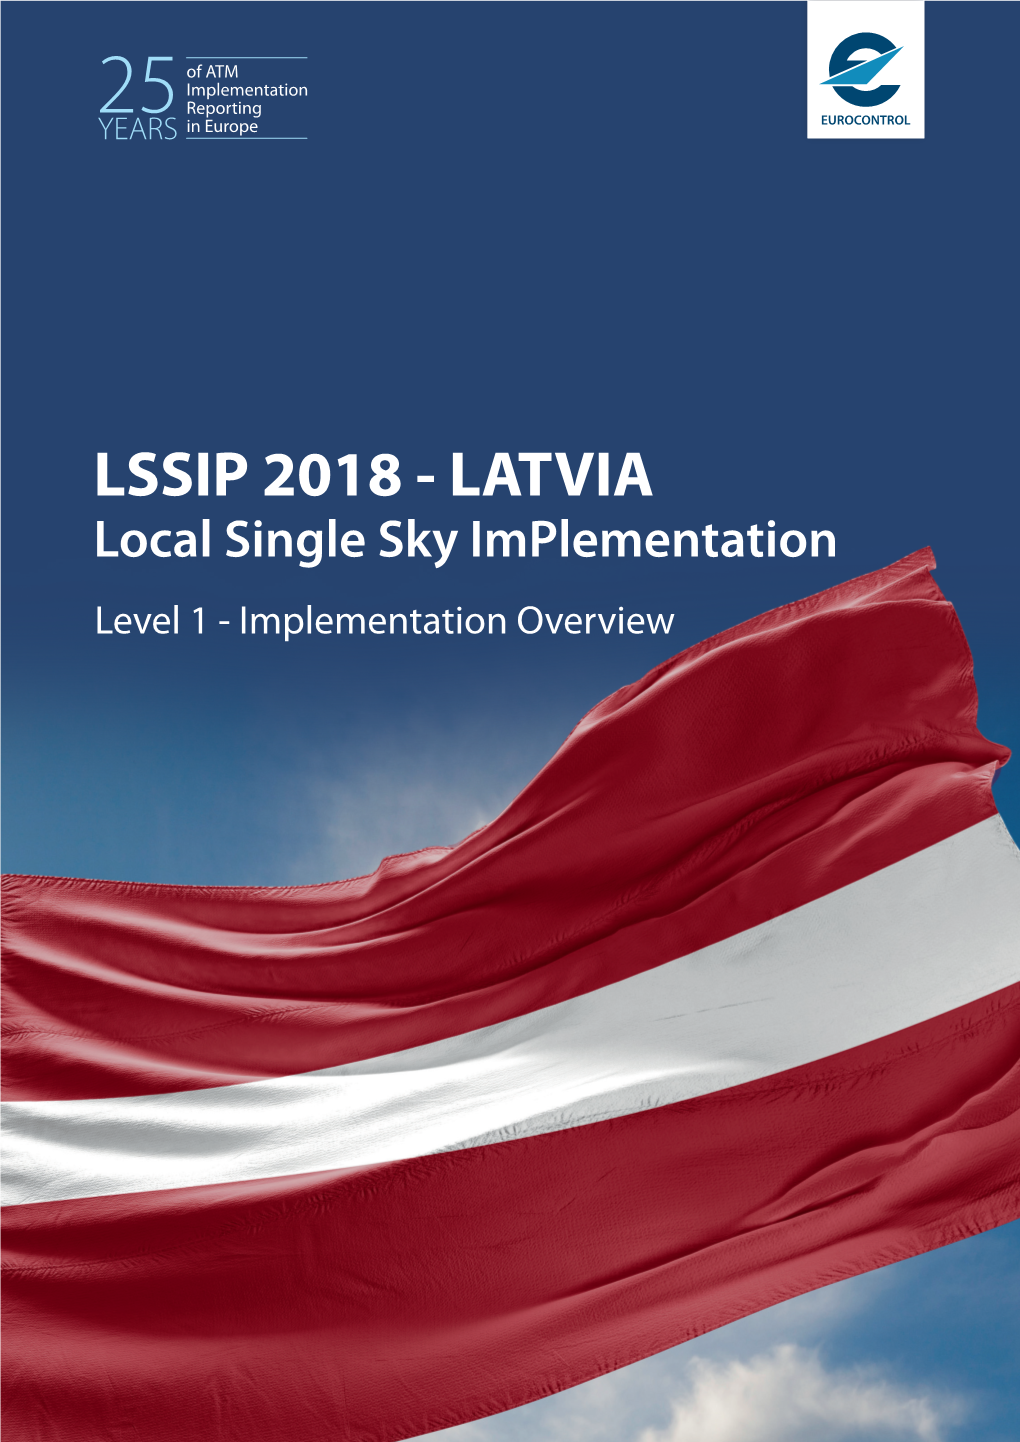 LSSIP 2018 - LATVIA Local Single Sky Implementation Level 1 - Implementation Overview